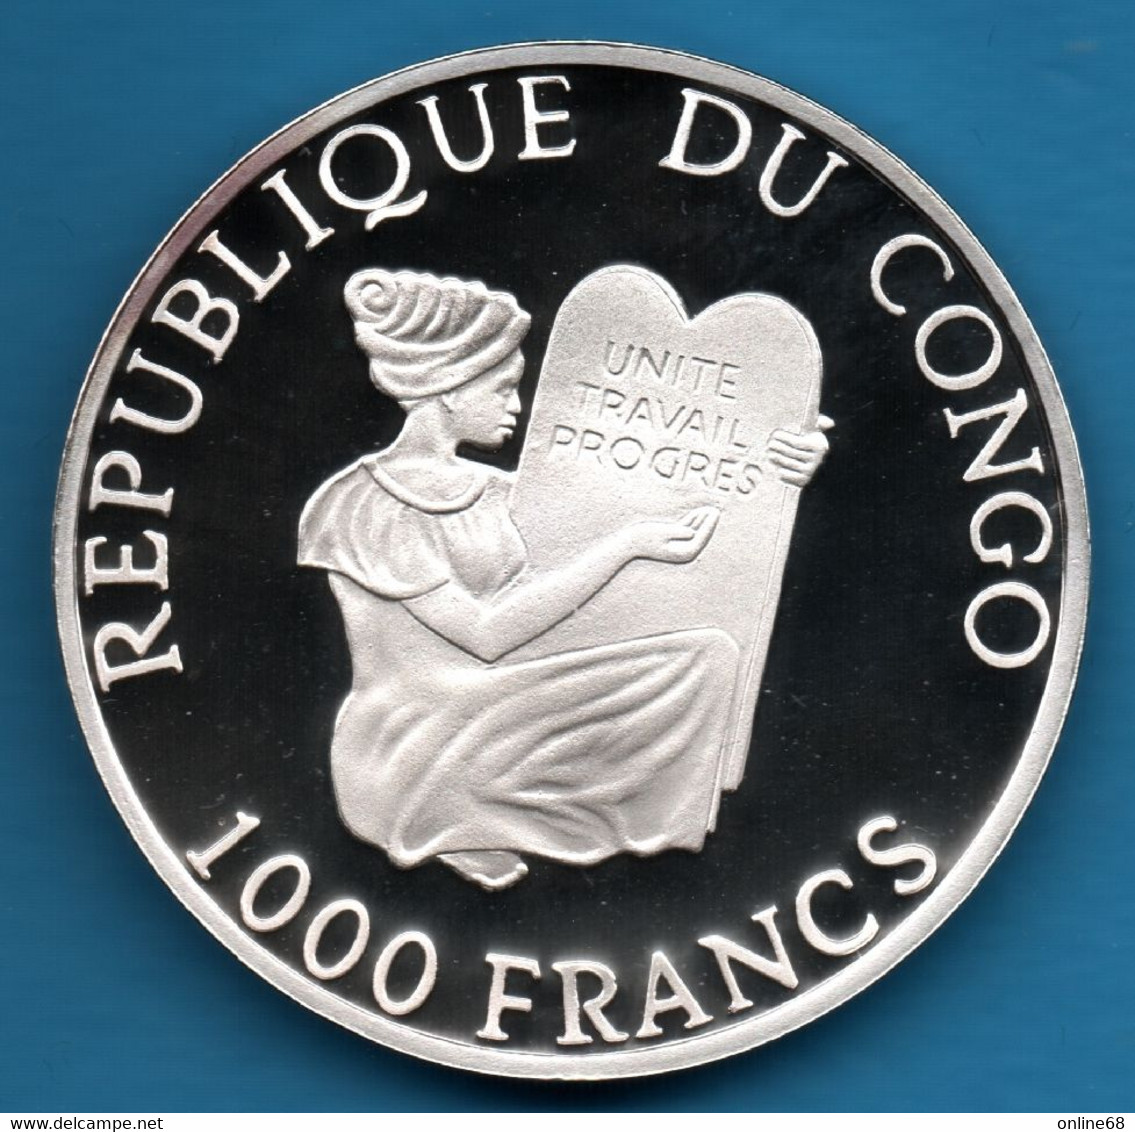 REPUBLIQUE DU CONGO 1000 Francs 1997 CORBITA CARGO ROMANI  KM# 29 	Argent 999‰ SILVER PROOF - Congo (Democratische Republiek 1998)